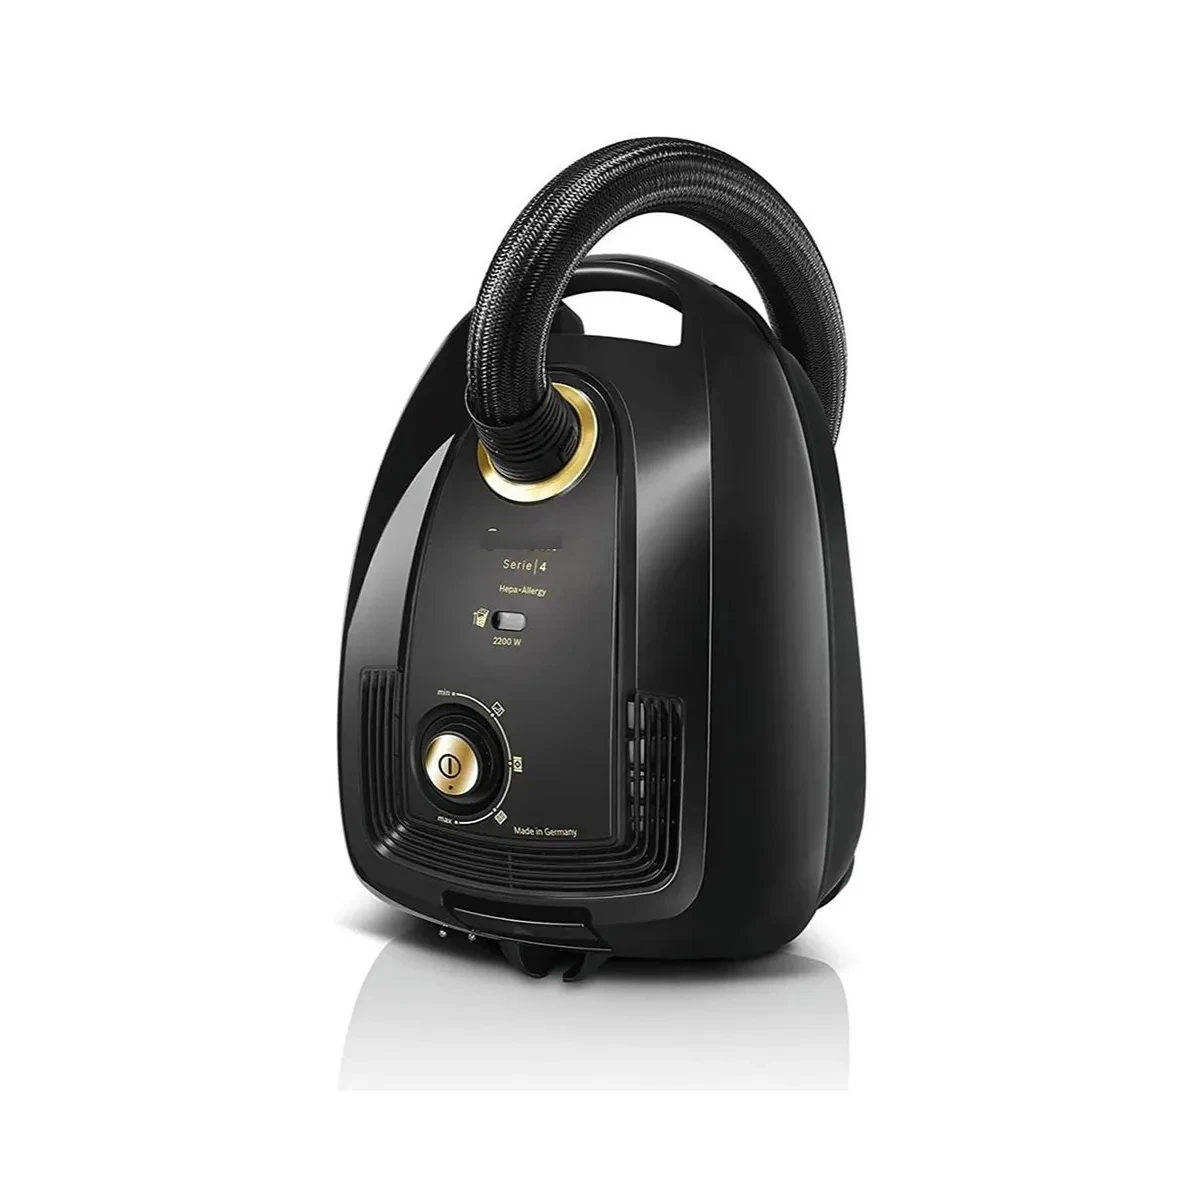 Bosch Bagged vacuum cleaner, Black - 2200 Watt